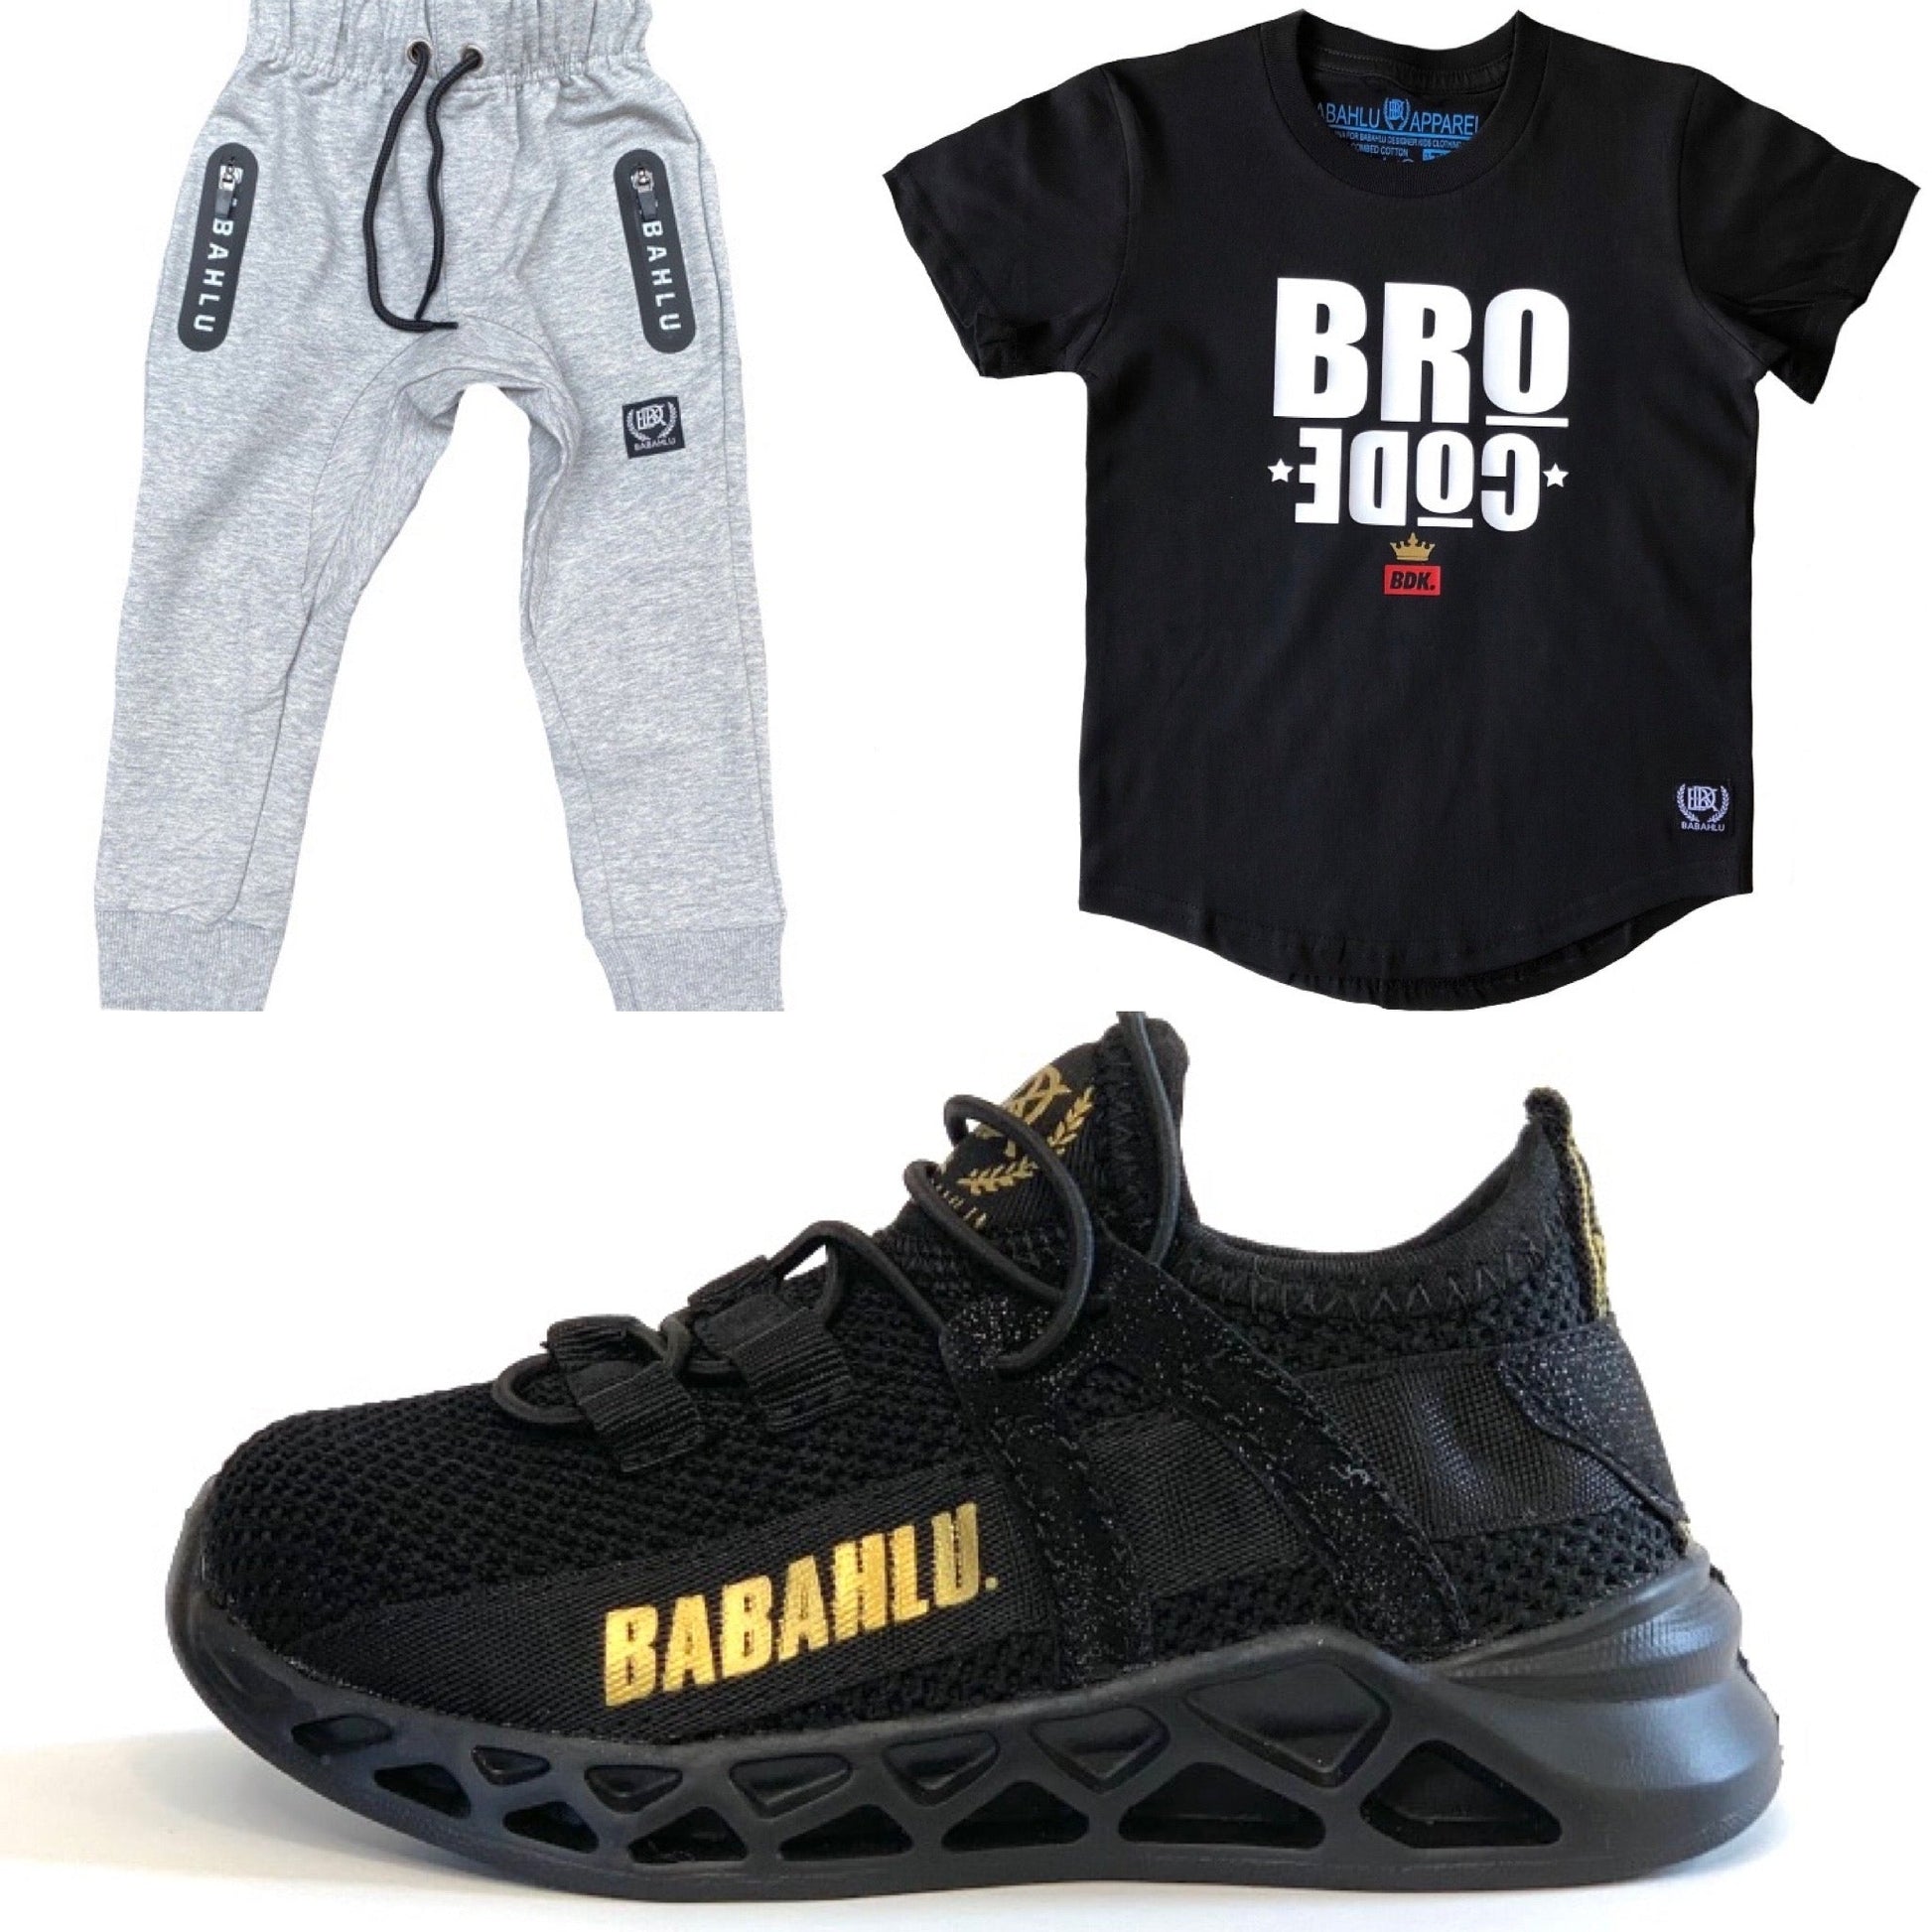 "Bro Code" T shirt - Babahlu Kids - Vinyl Print T-shirts